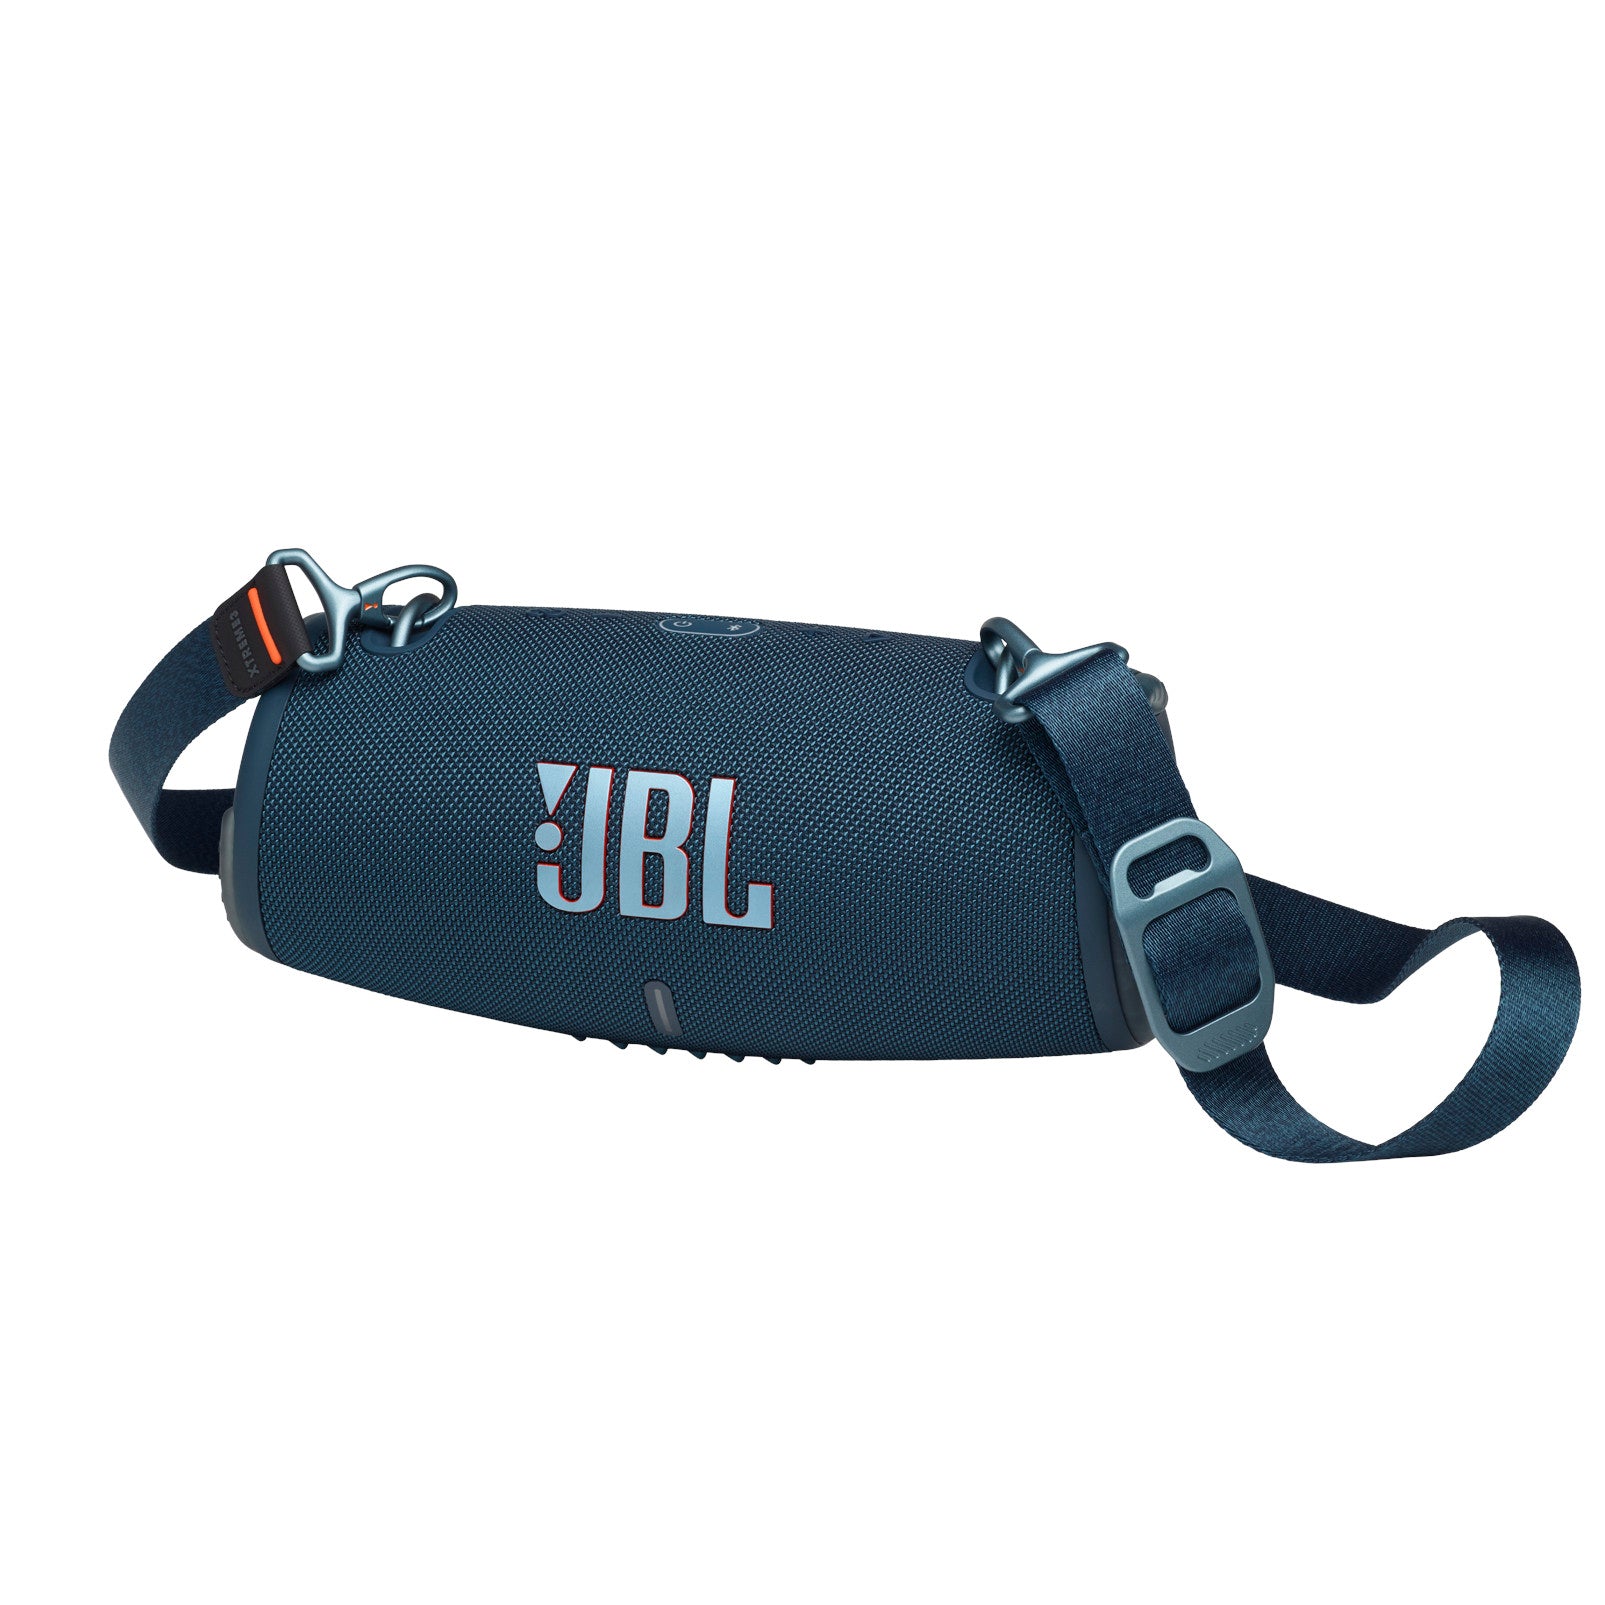 JBL Xtreme 3 Portable Bluetooth Speaker - Black Camo for sale online